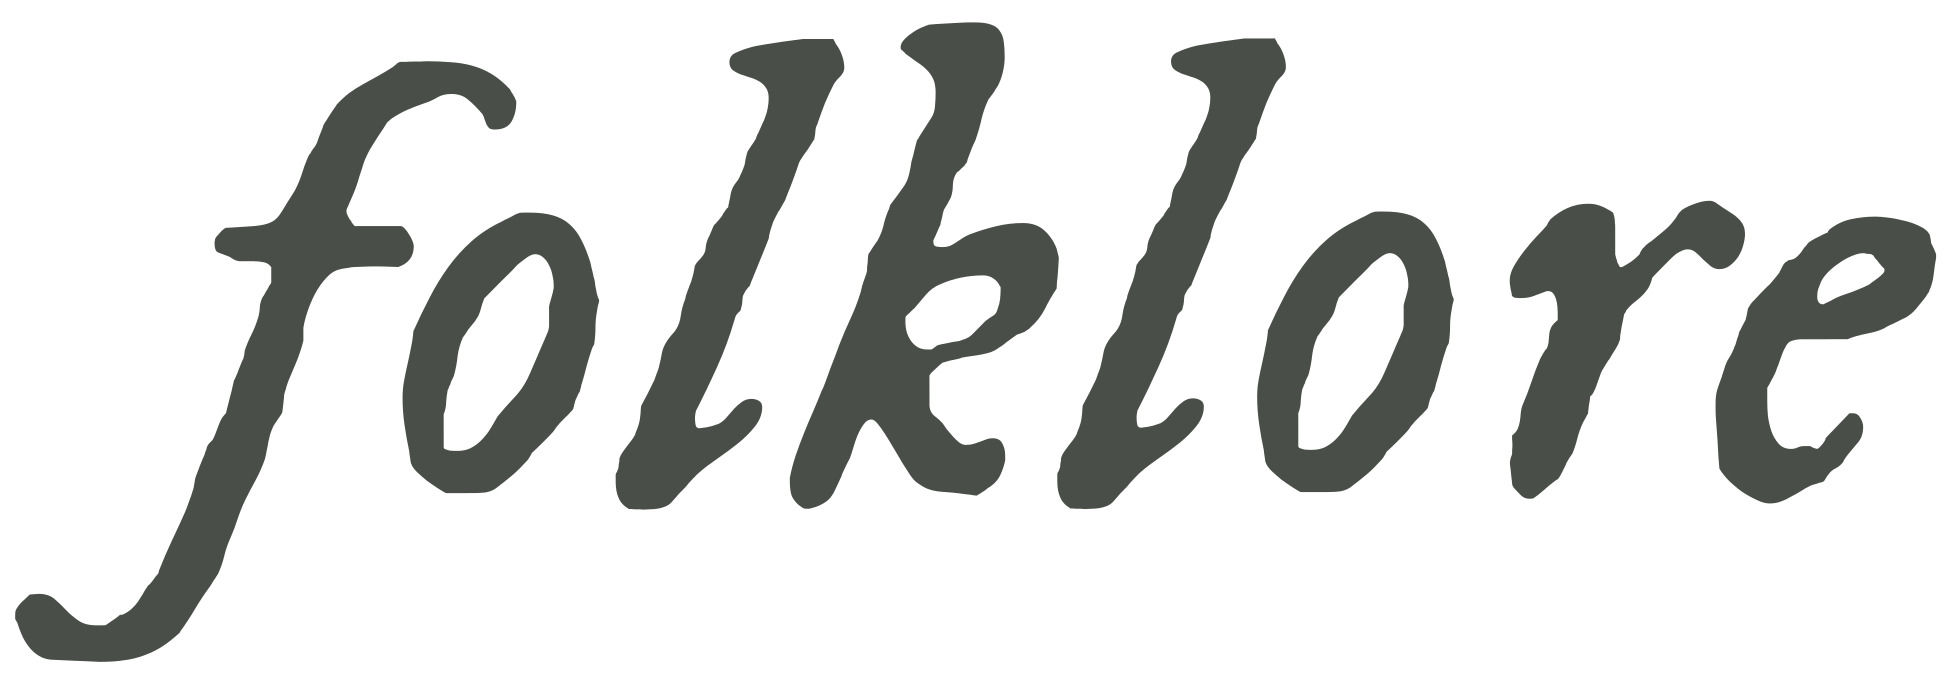 taylor-swift-folklore-font